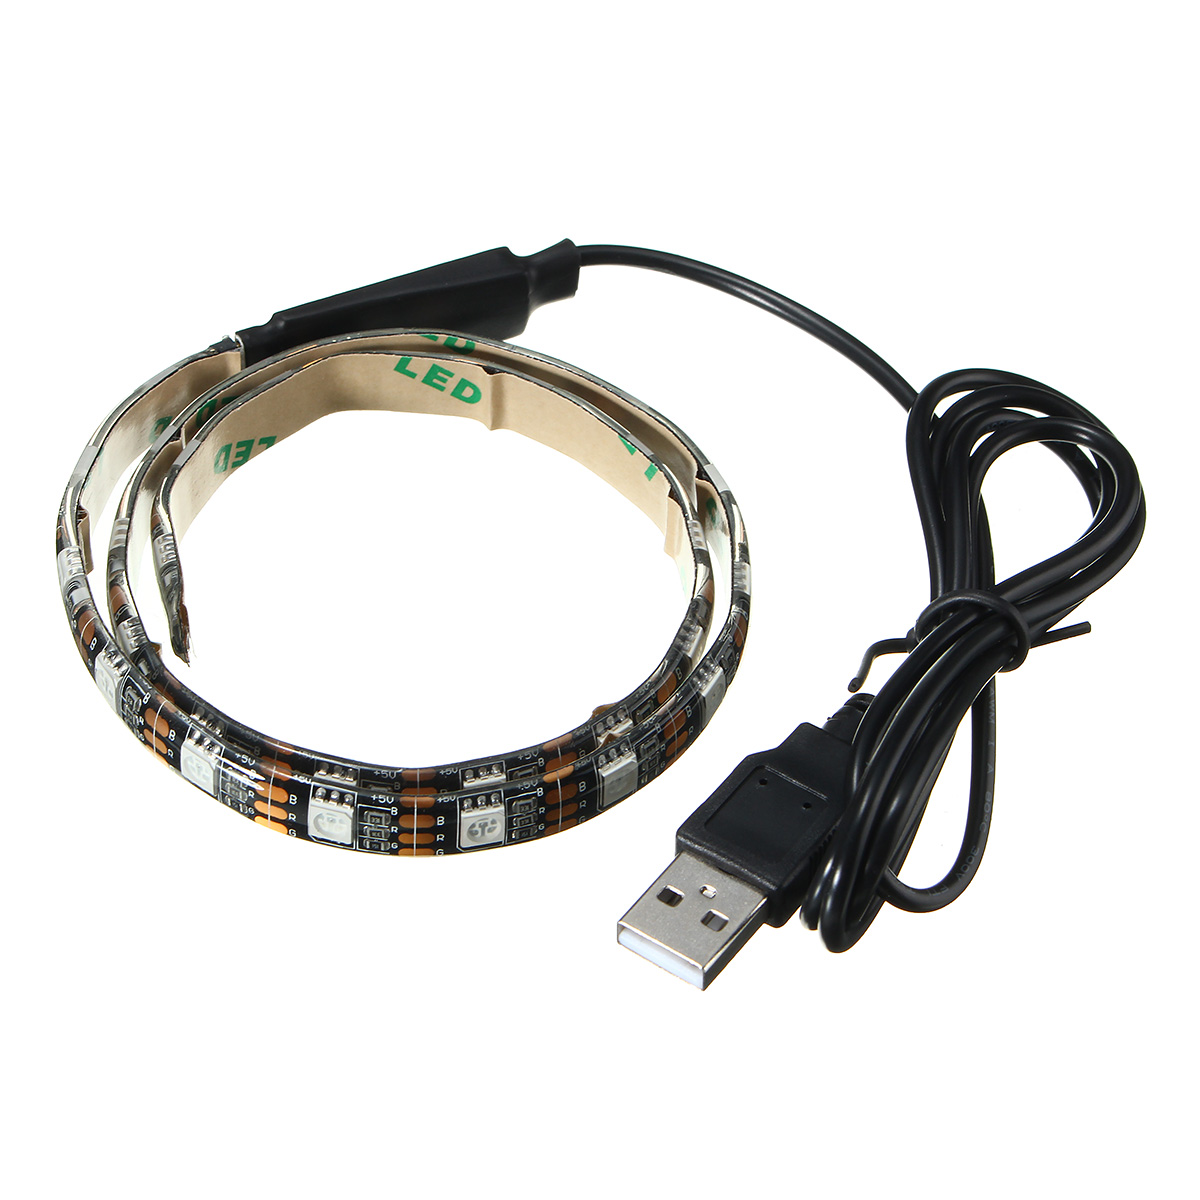 Waterproof-5050-USB-Black-TV-PC-Background-RGB-LED-Strip-Light-Xmas-Decor-Remote-DC5V-1094959-2